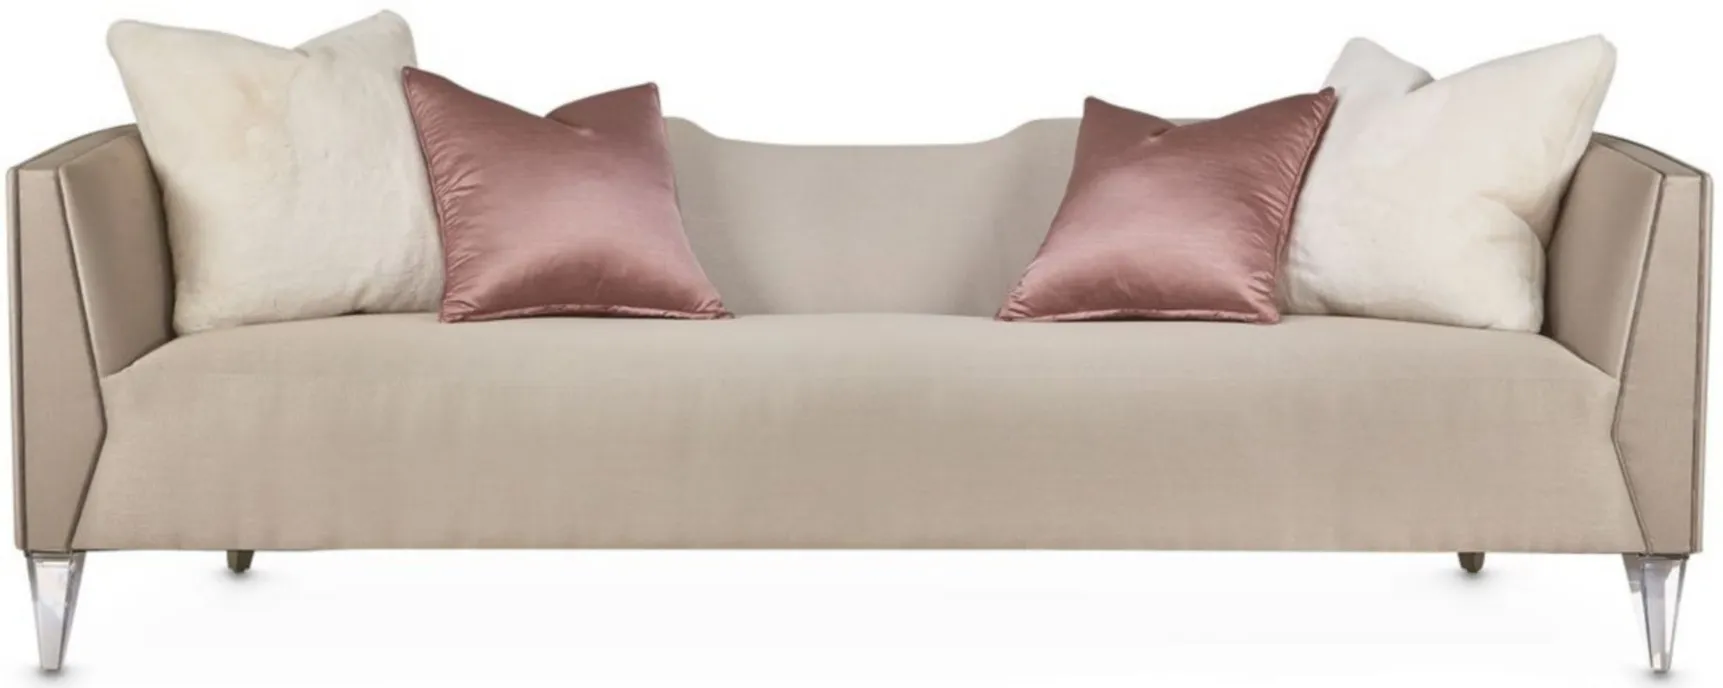 Linea Sofa in Silver Mist by Amini Innovation